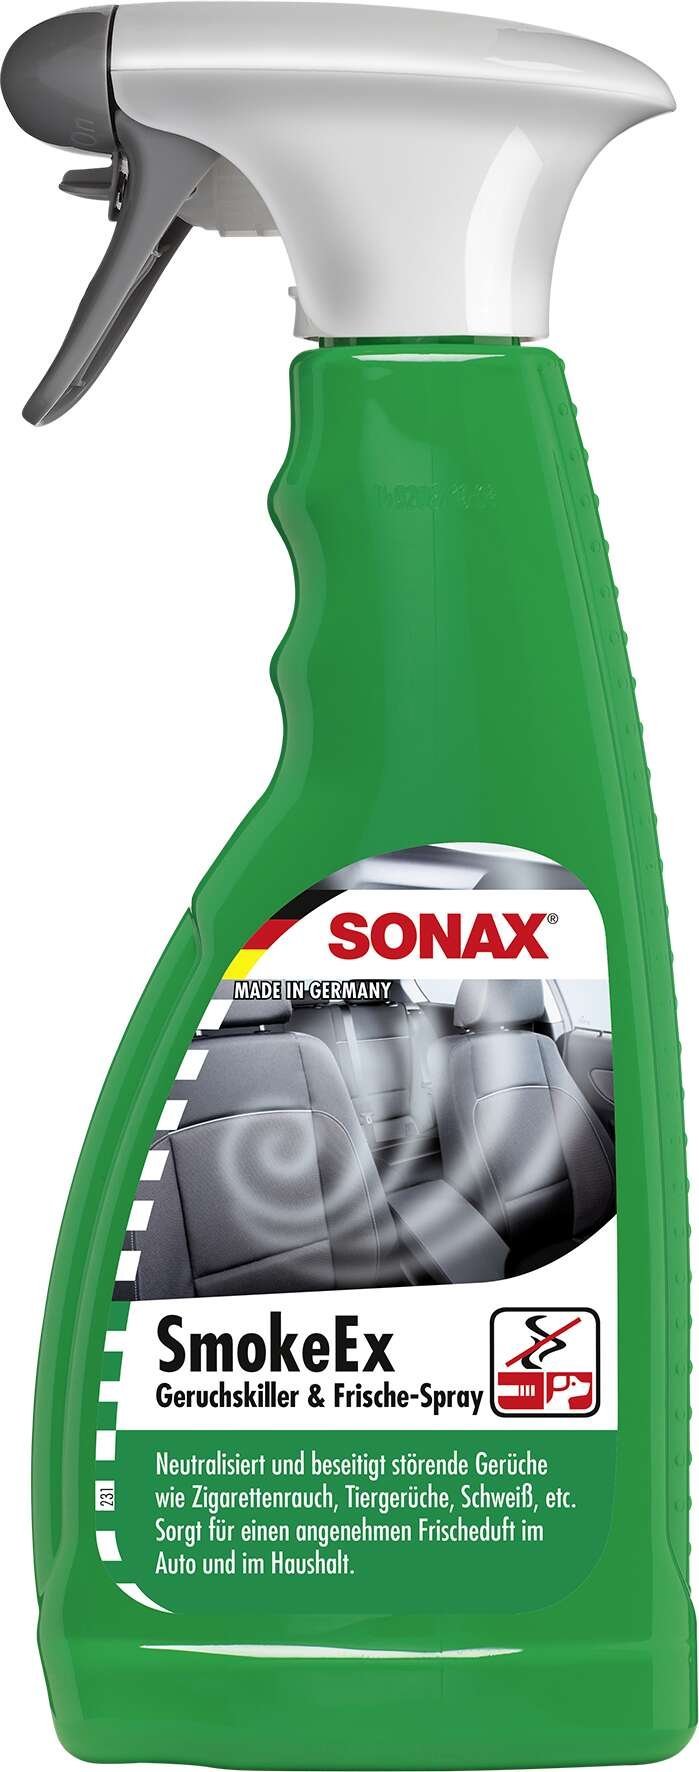 SONAX SmokeEX odour killer 500 ml PET spray bottle